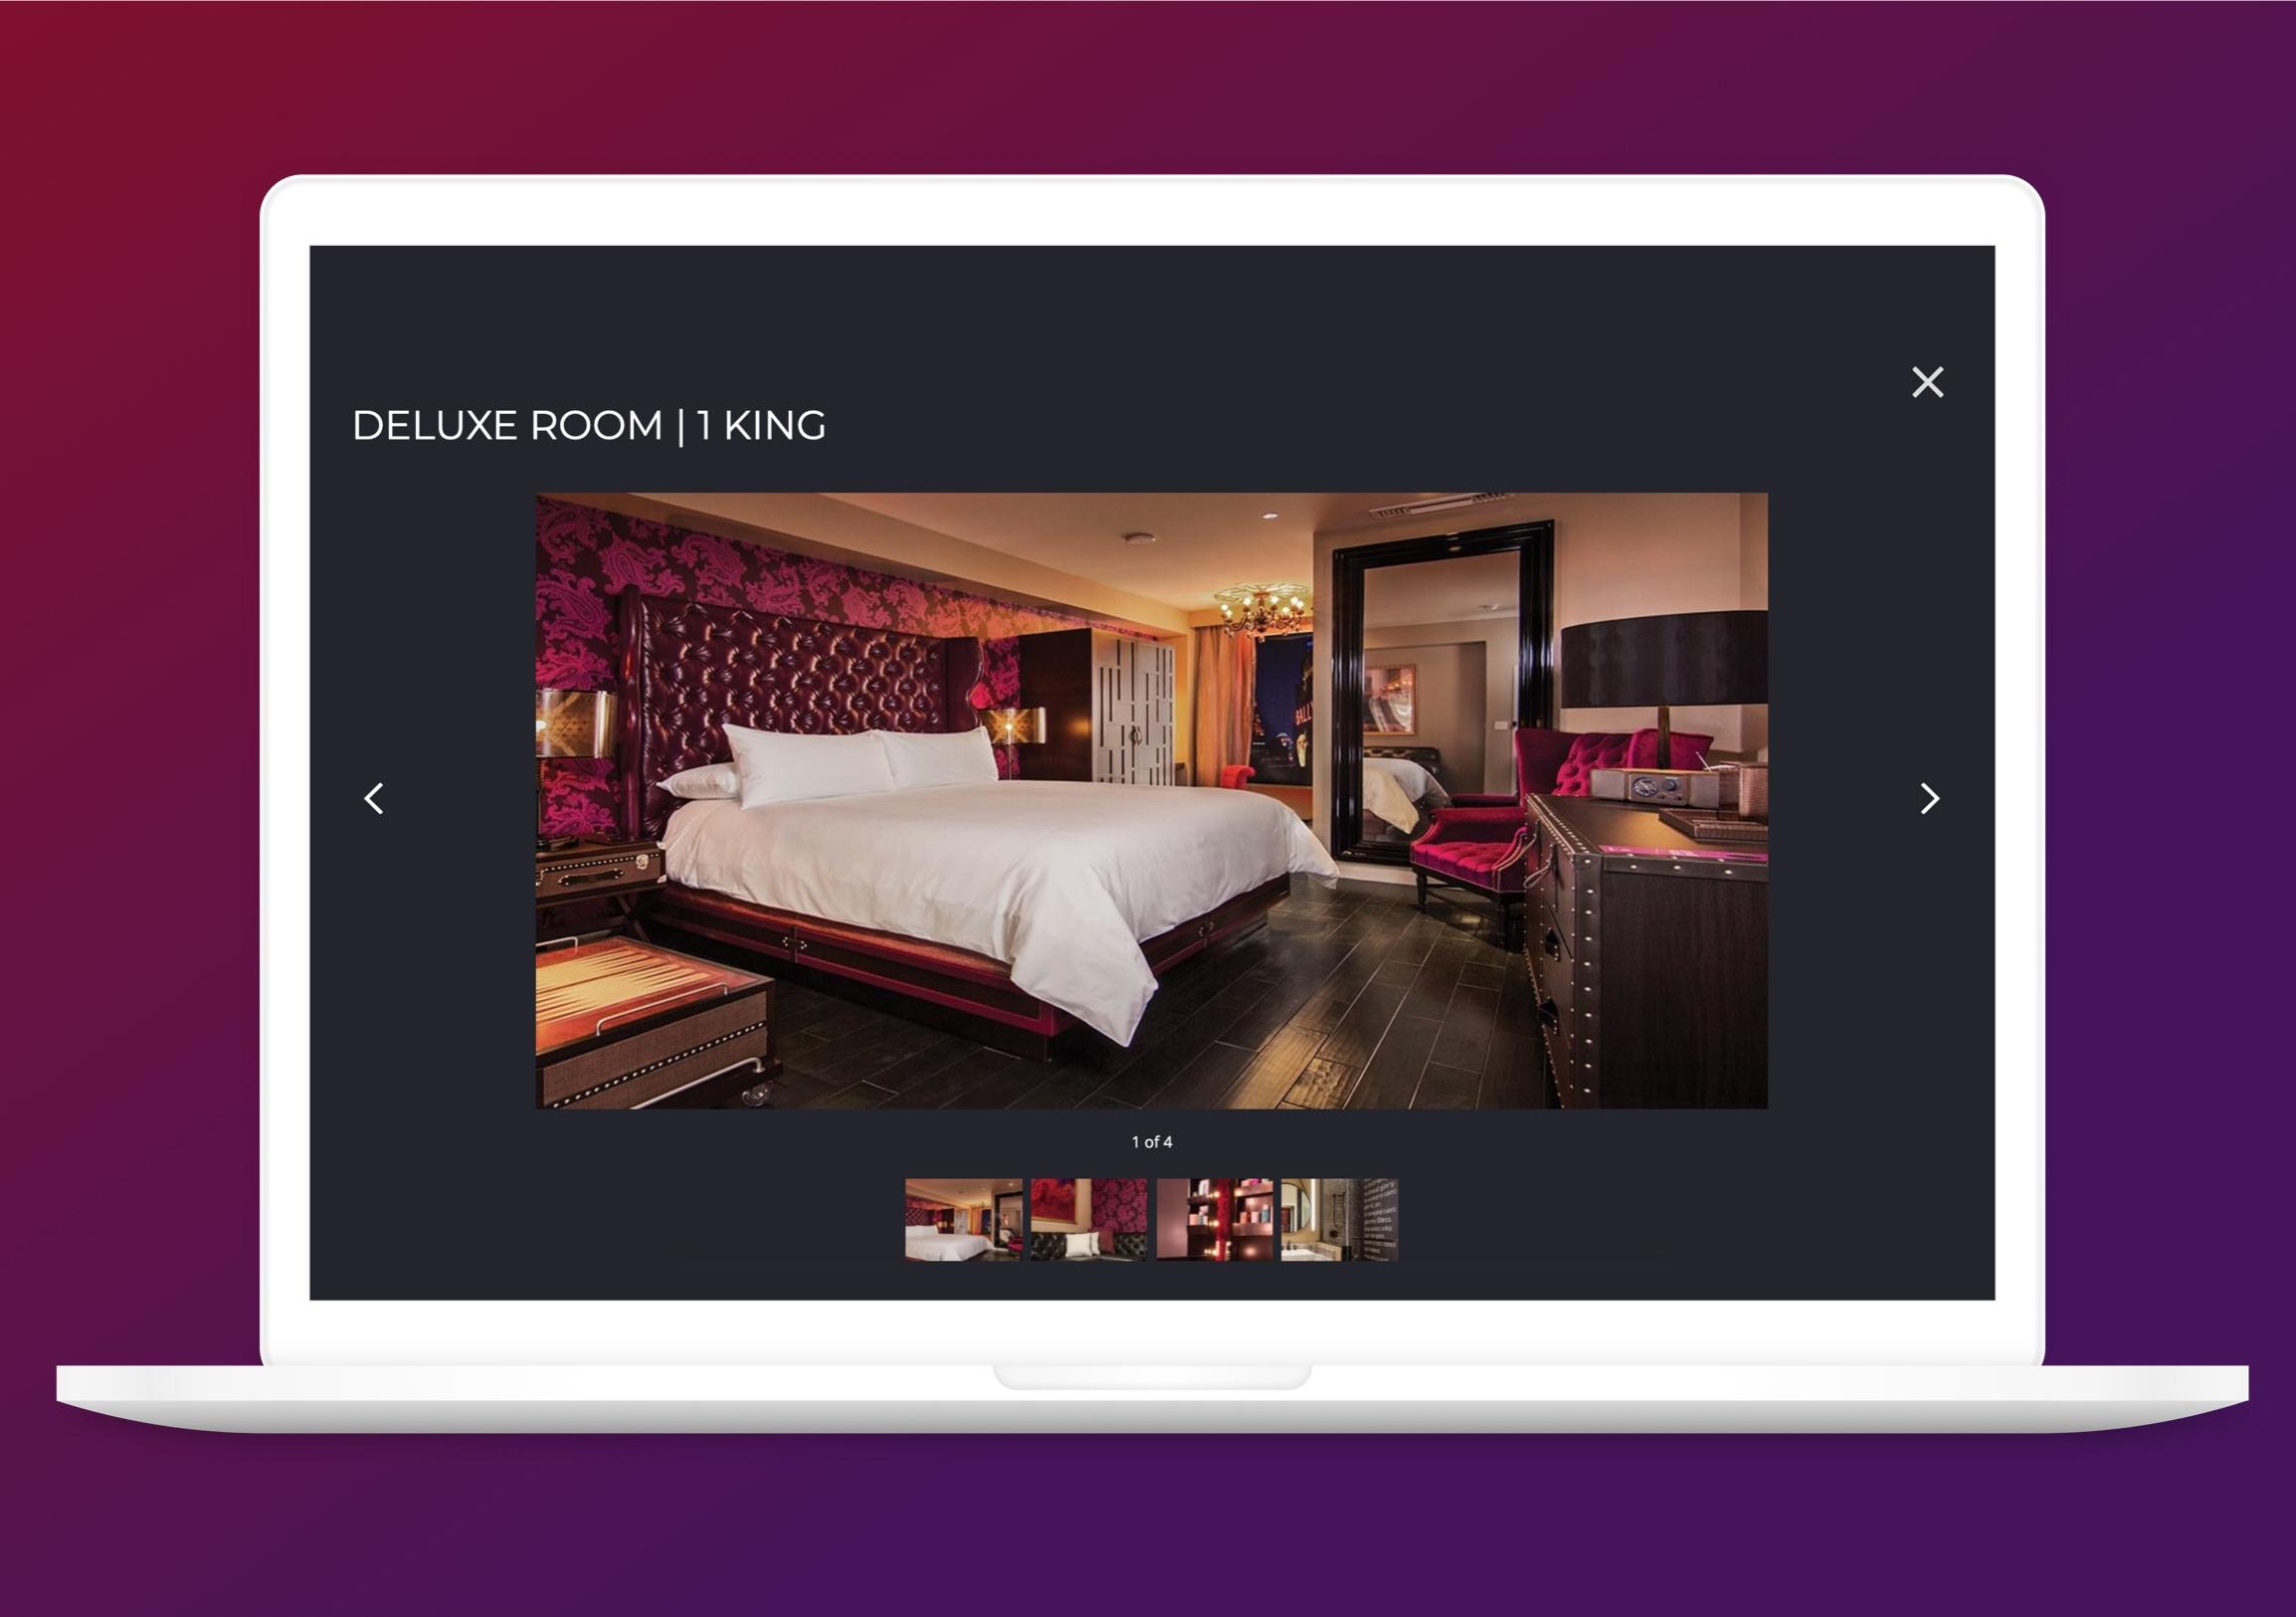 caesars website showing photo of hotel room